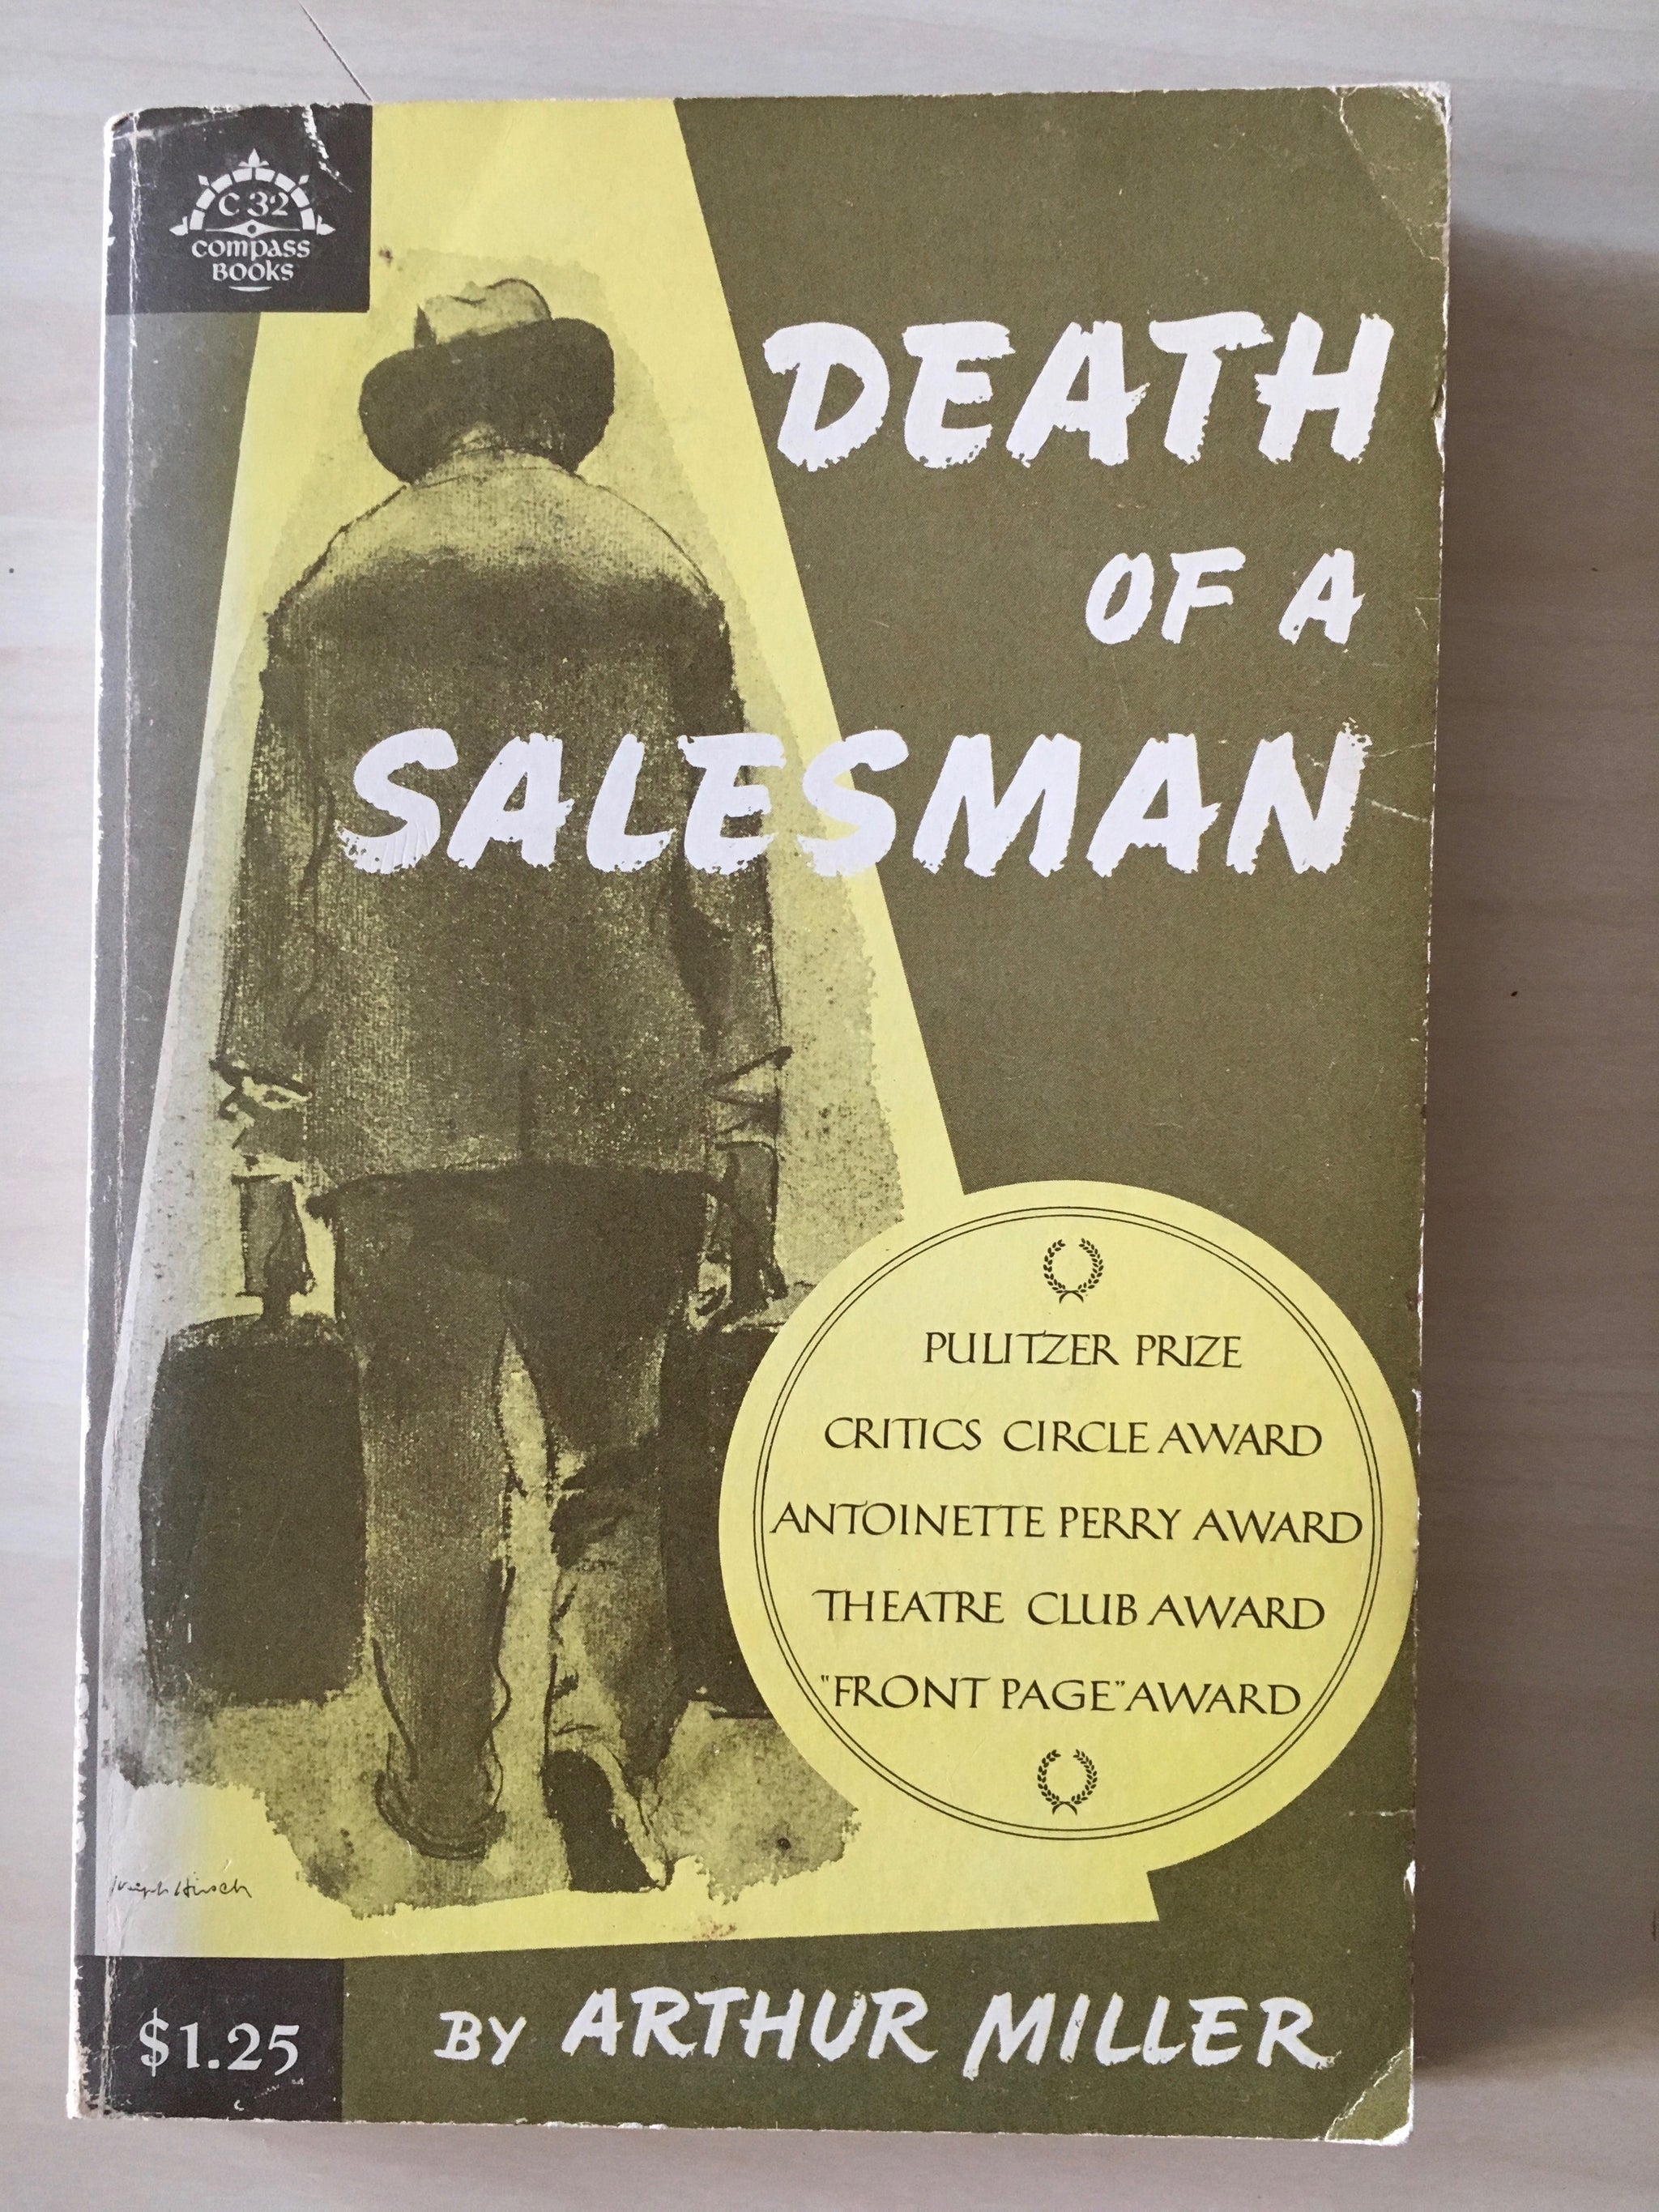 death of a salesman 1985 script pdf